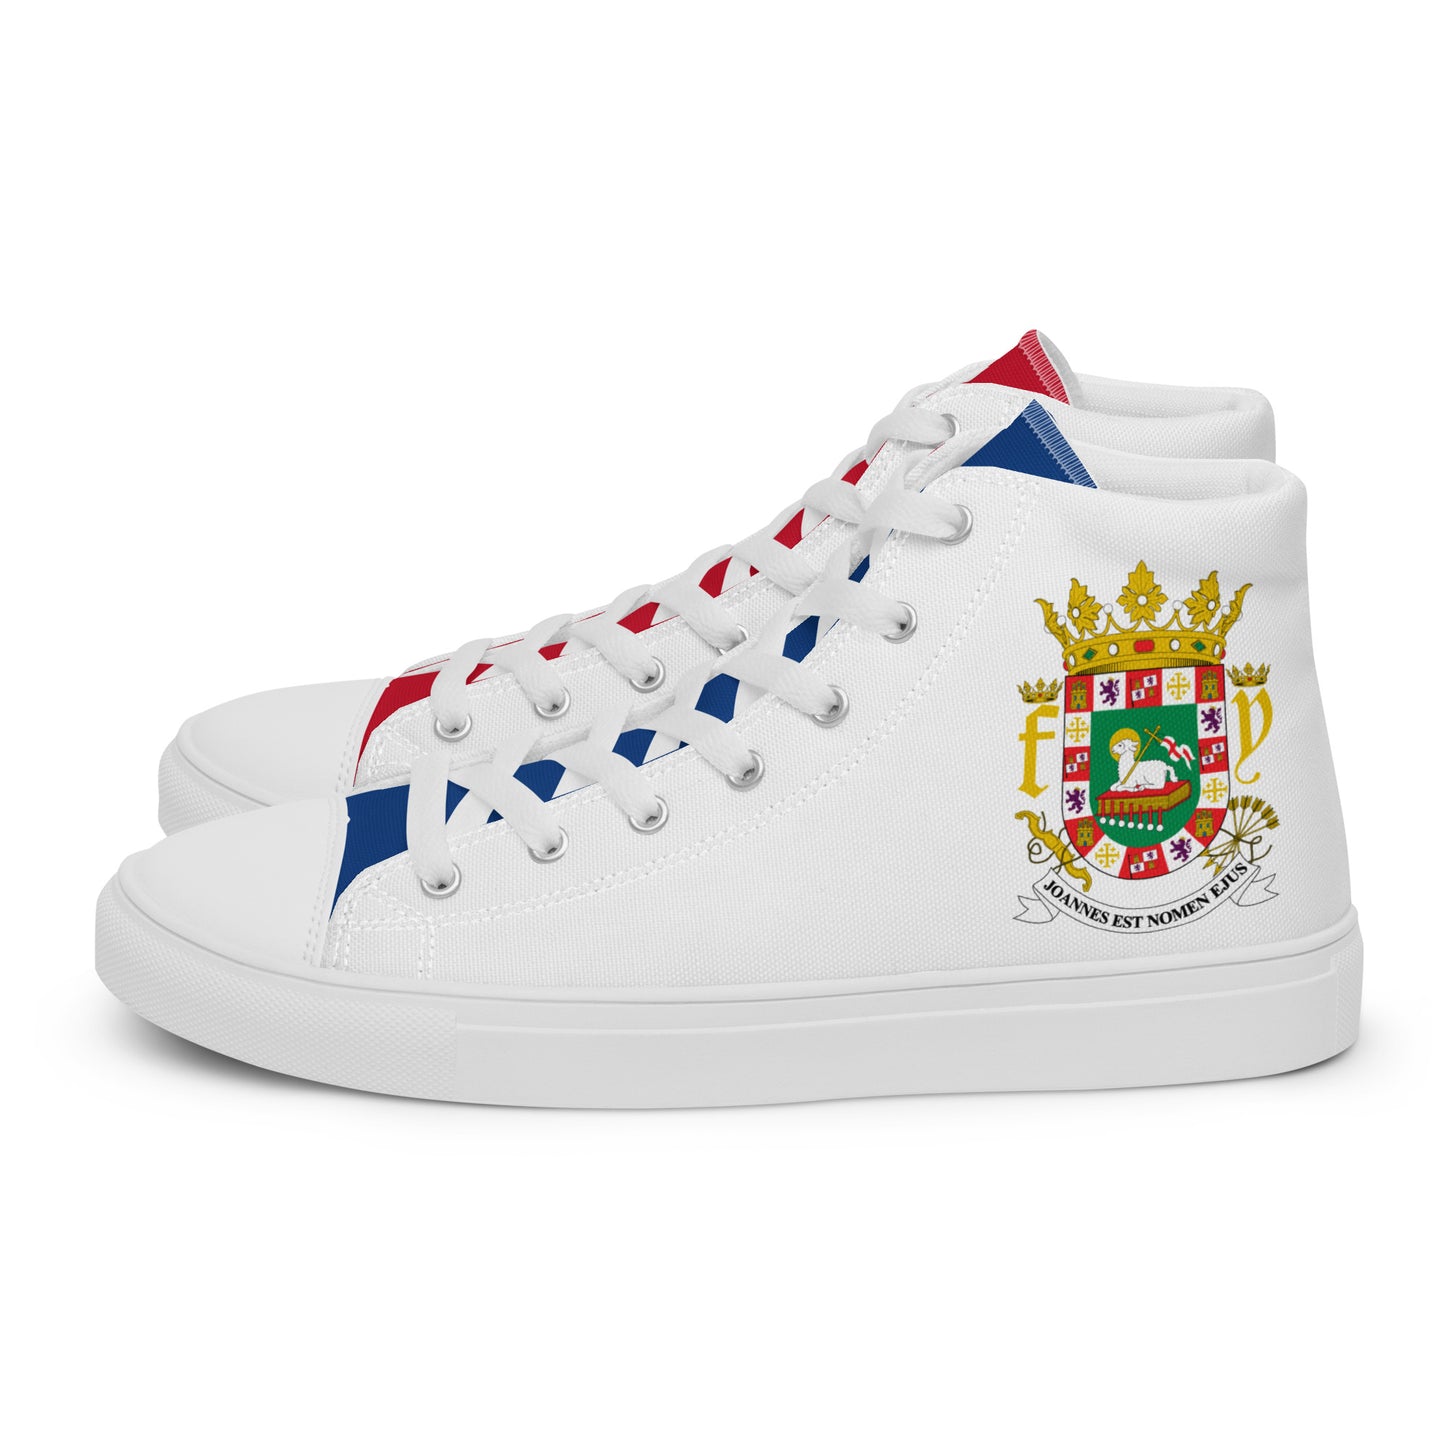 Puerto Rico - Men - White - High top shoes